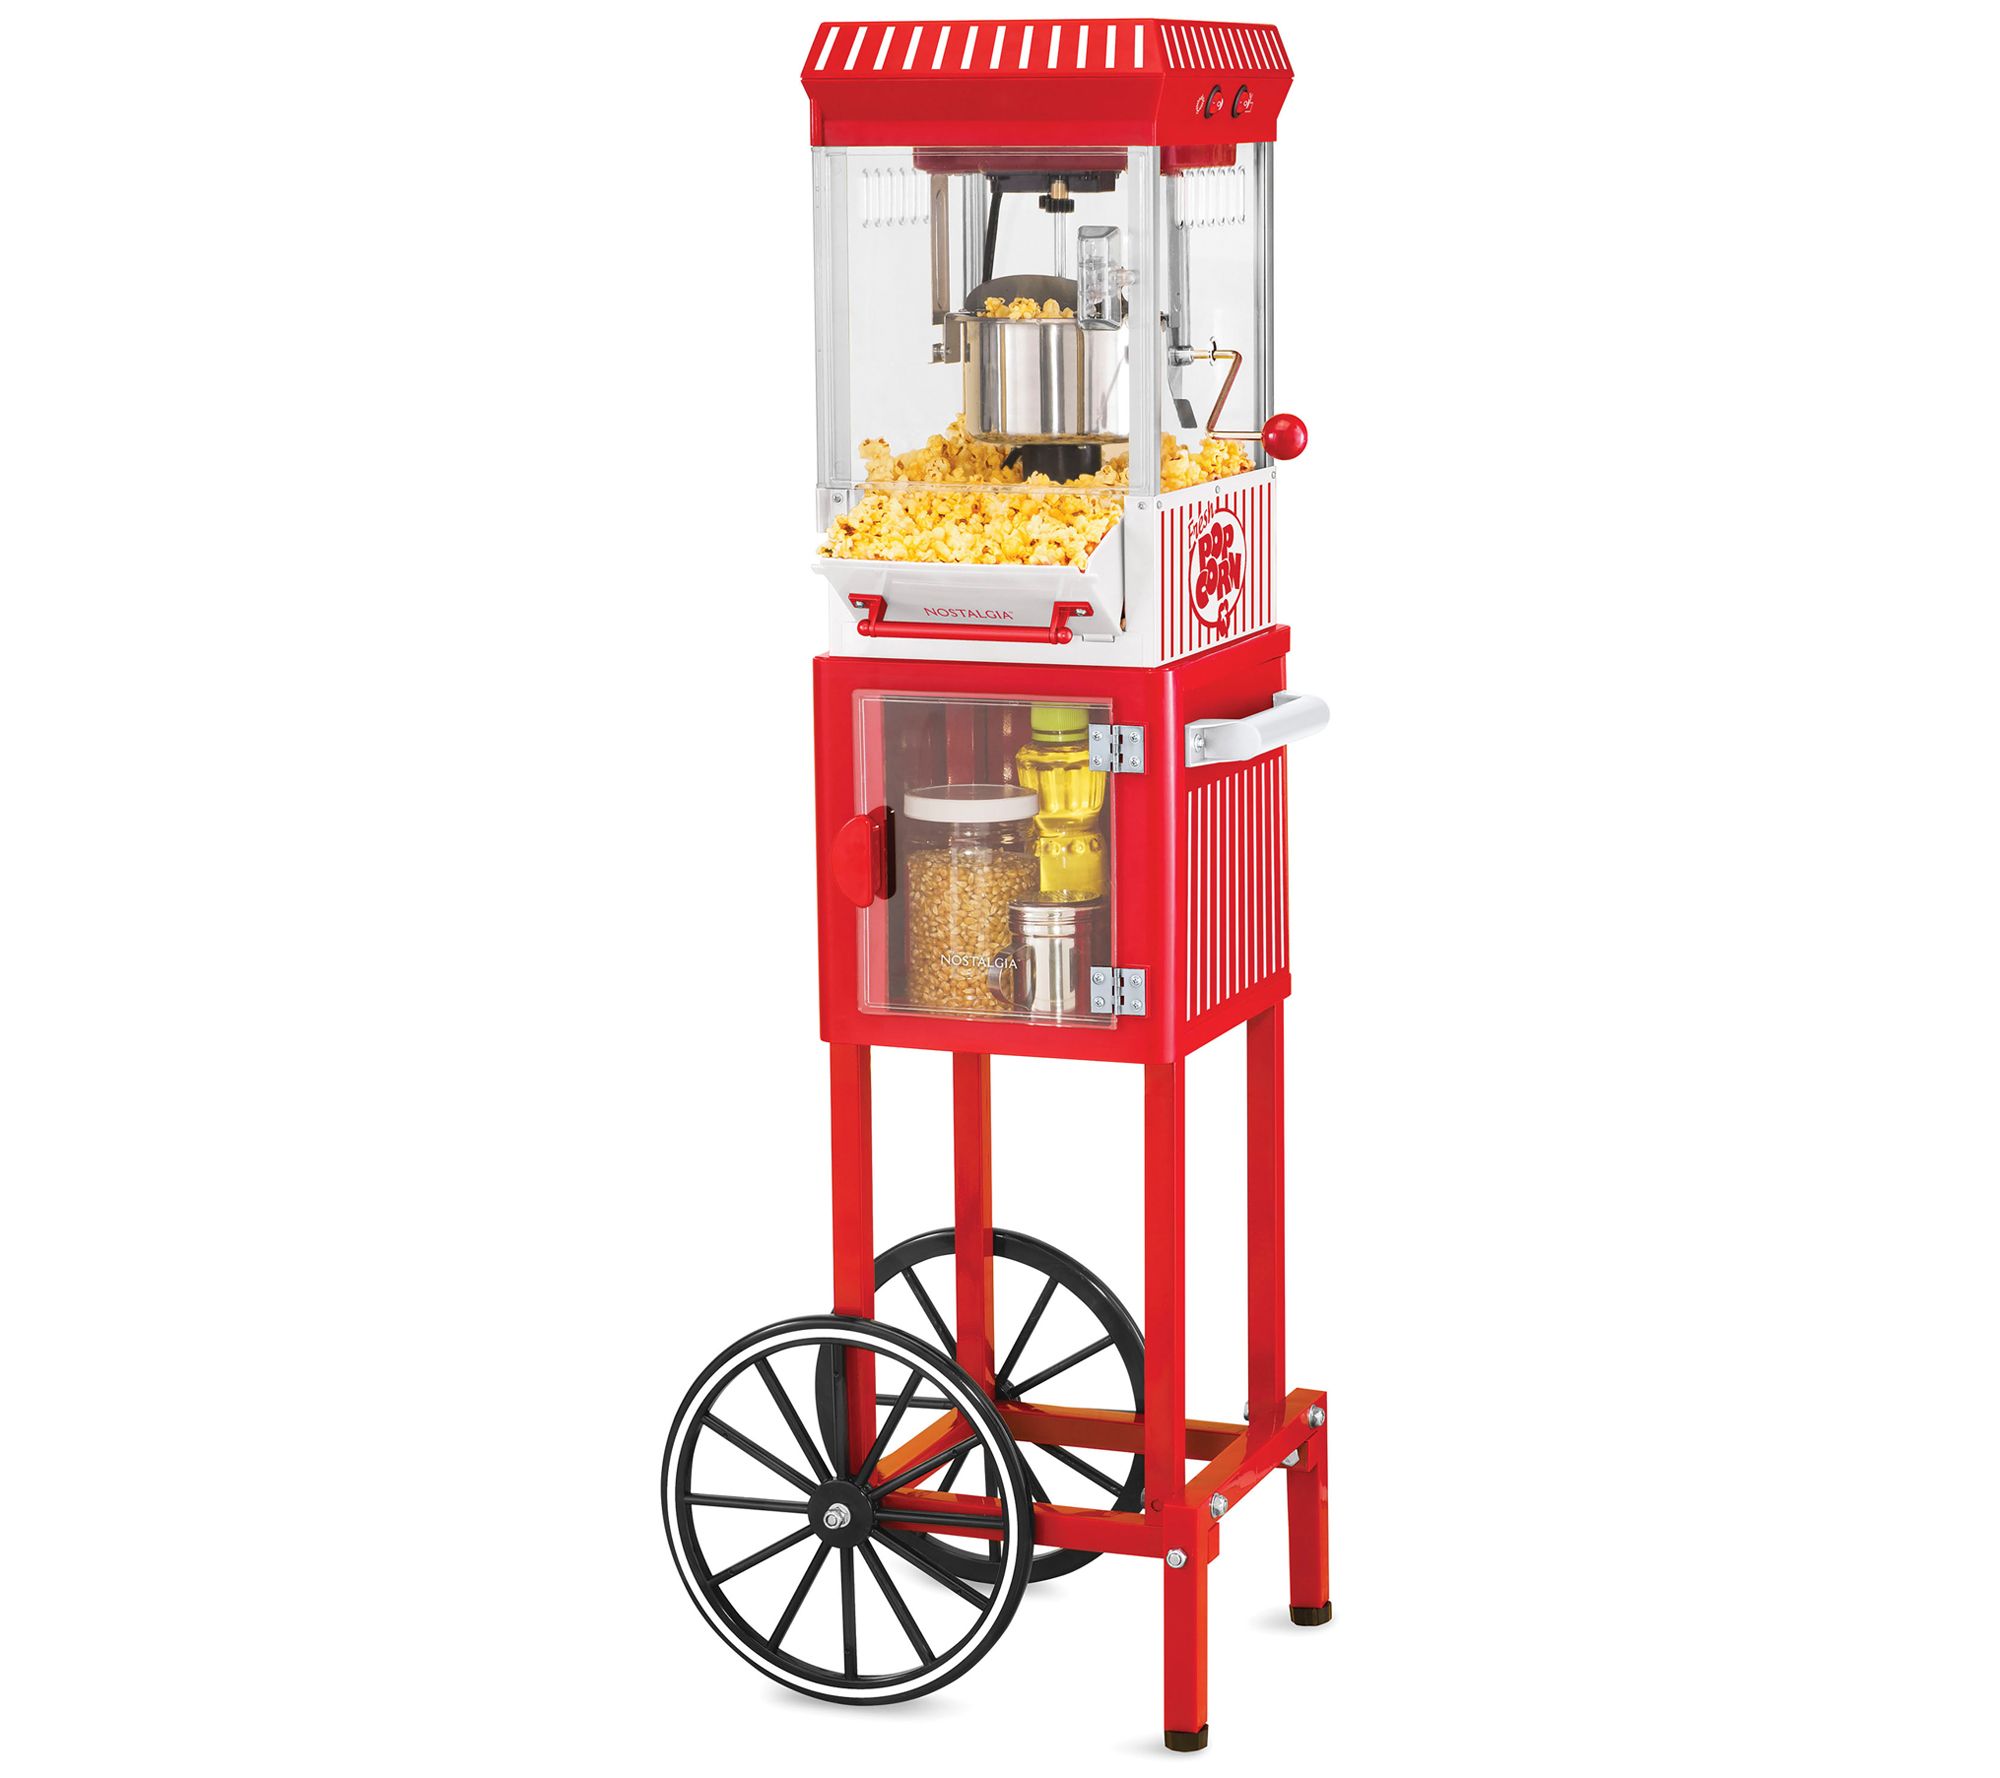 Nostalgia Coca Cola Ounce Kettle Popcorn Maker 3D model